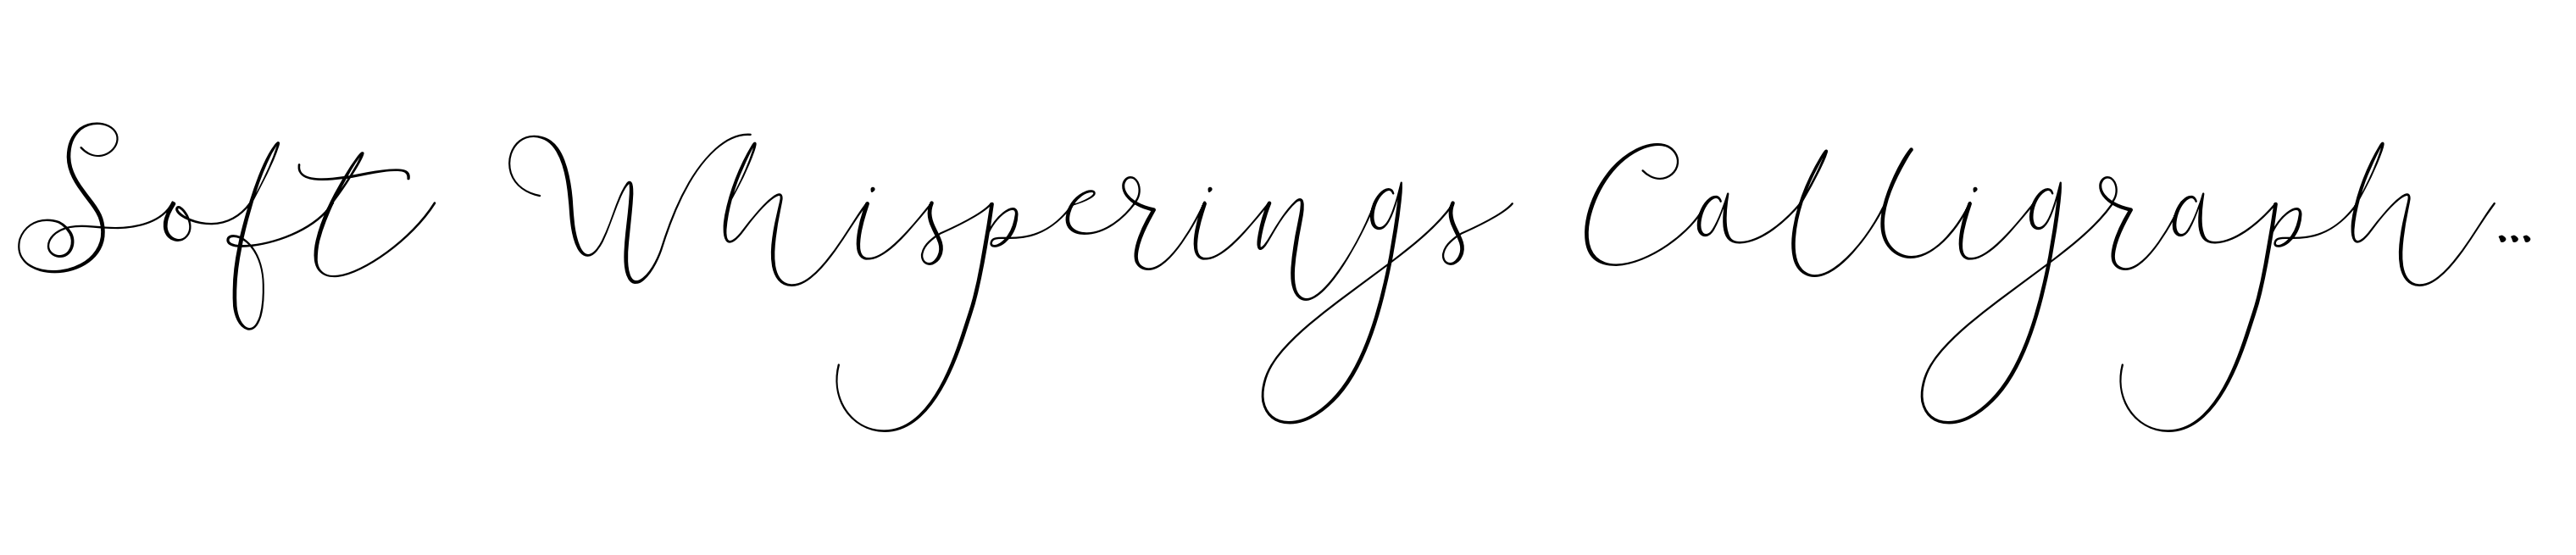 Soft Whisperings Calligraphic